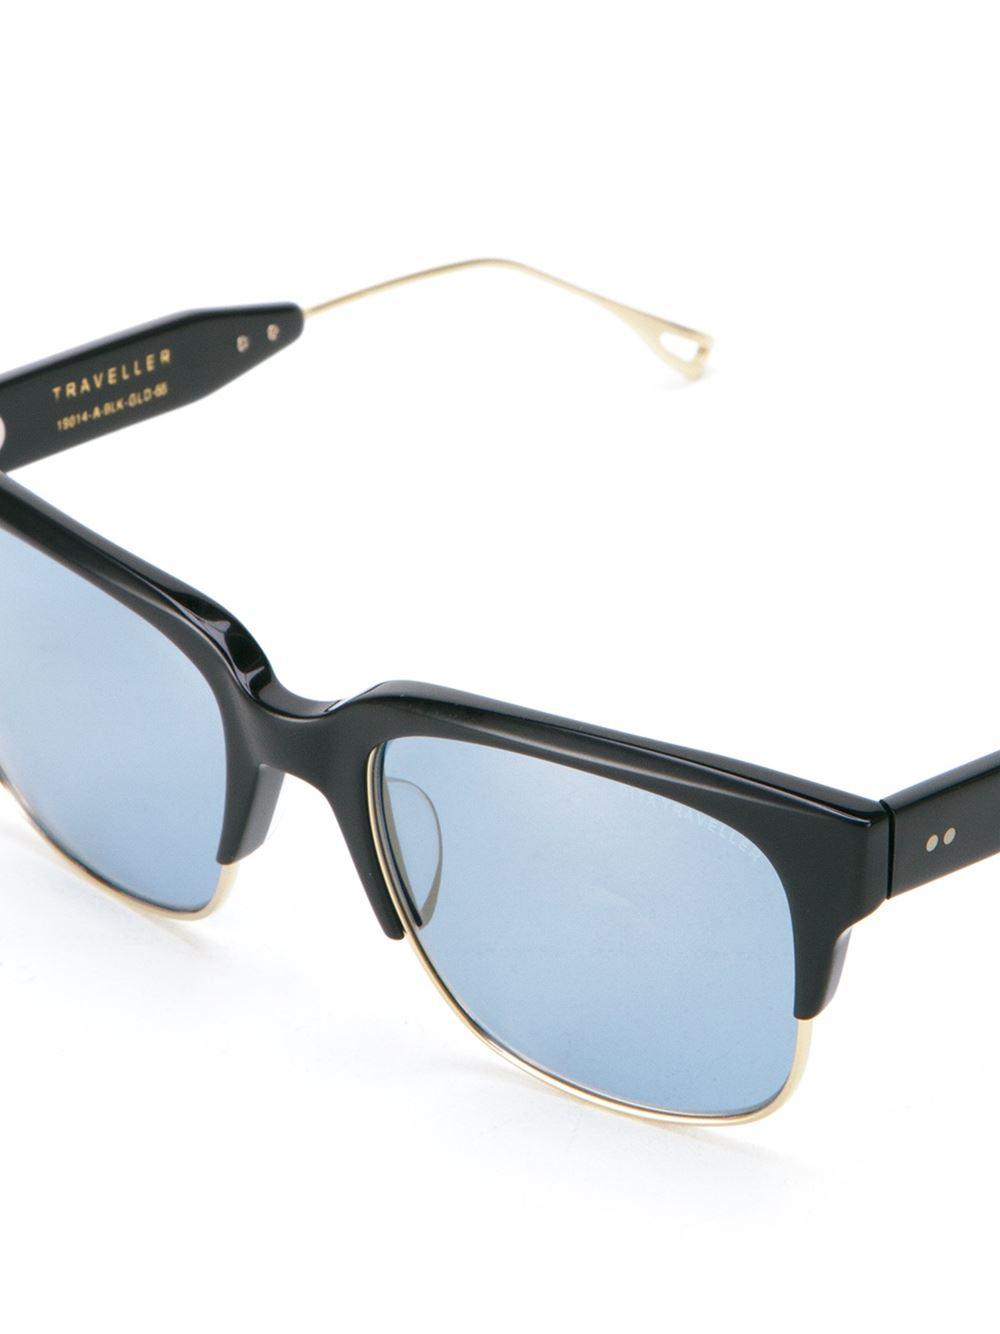 Dita Eyewear 'traveller' Sunglasses in Black - Lyst